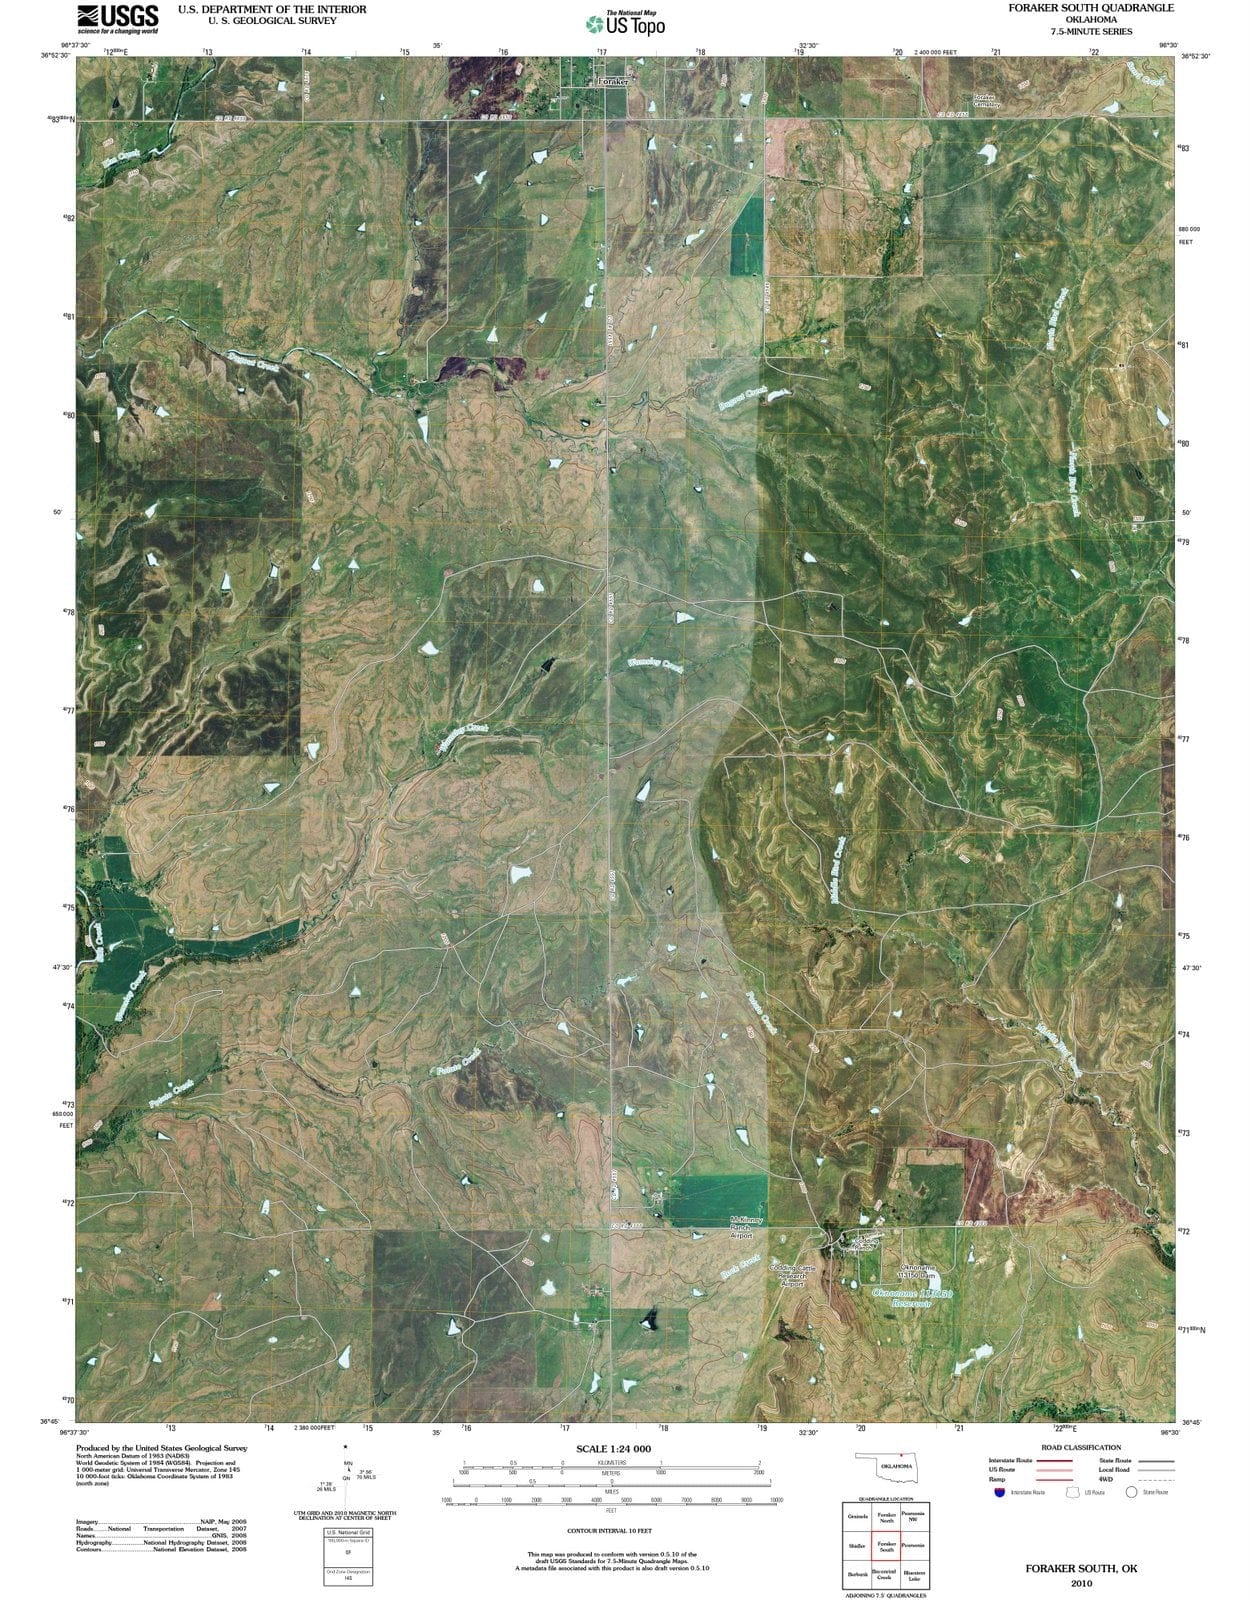 2010 Foraker South, OK - Oklahoma - USGS Topographic Map